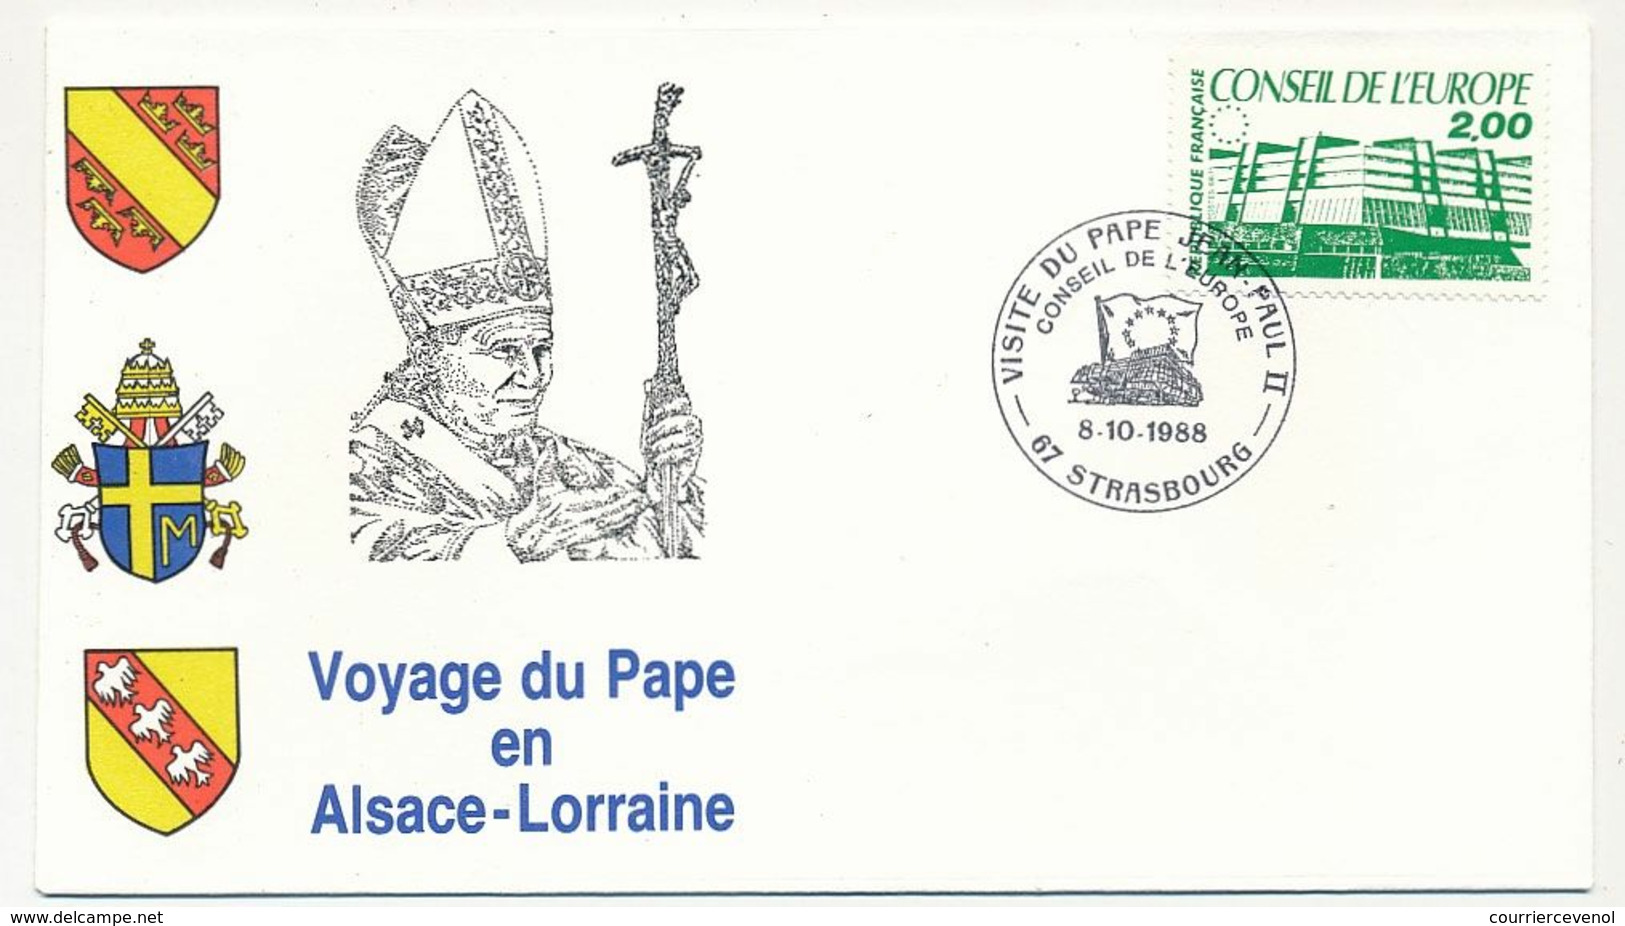 FRANCE - 7 Enveloppes Voyage Du Pape En Alsace Lorraine 1988 + VATICAN - 1 Env Idem - Christianity